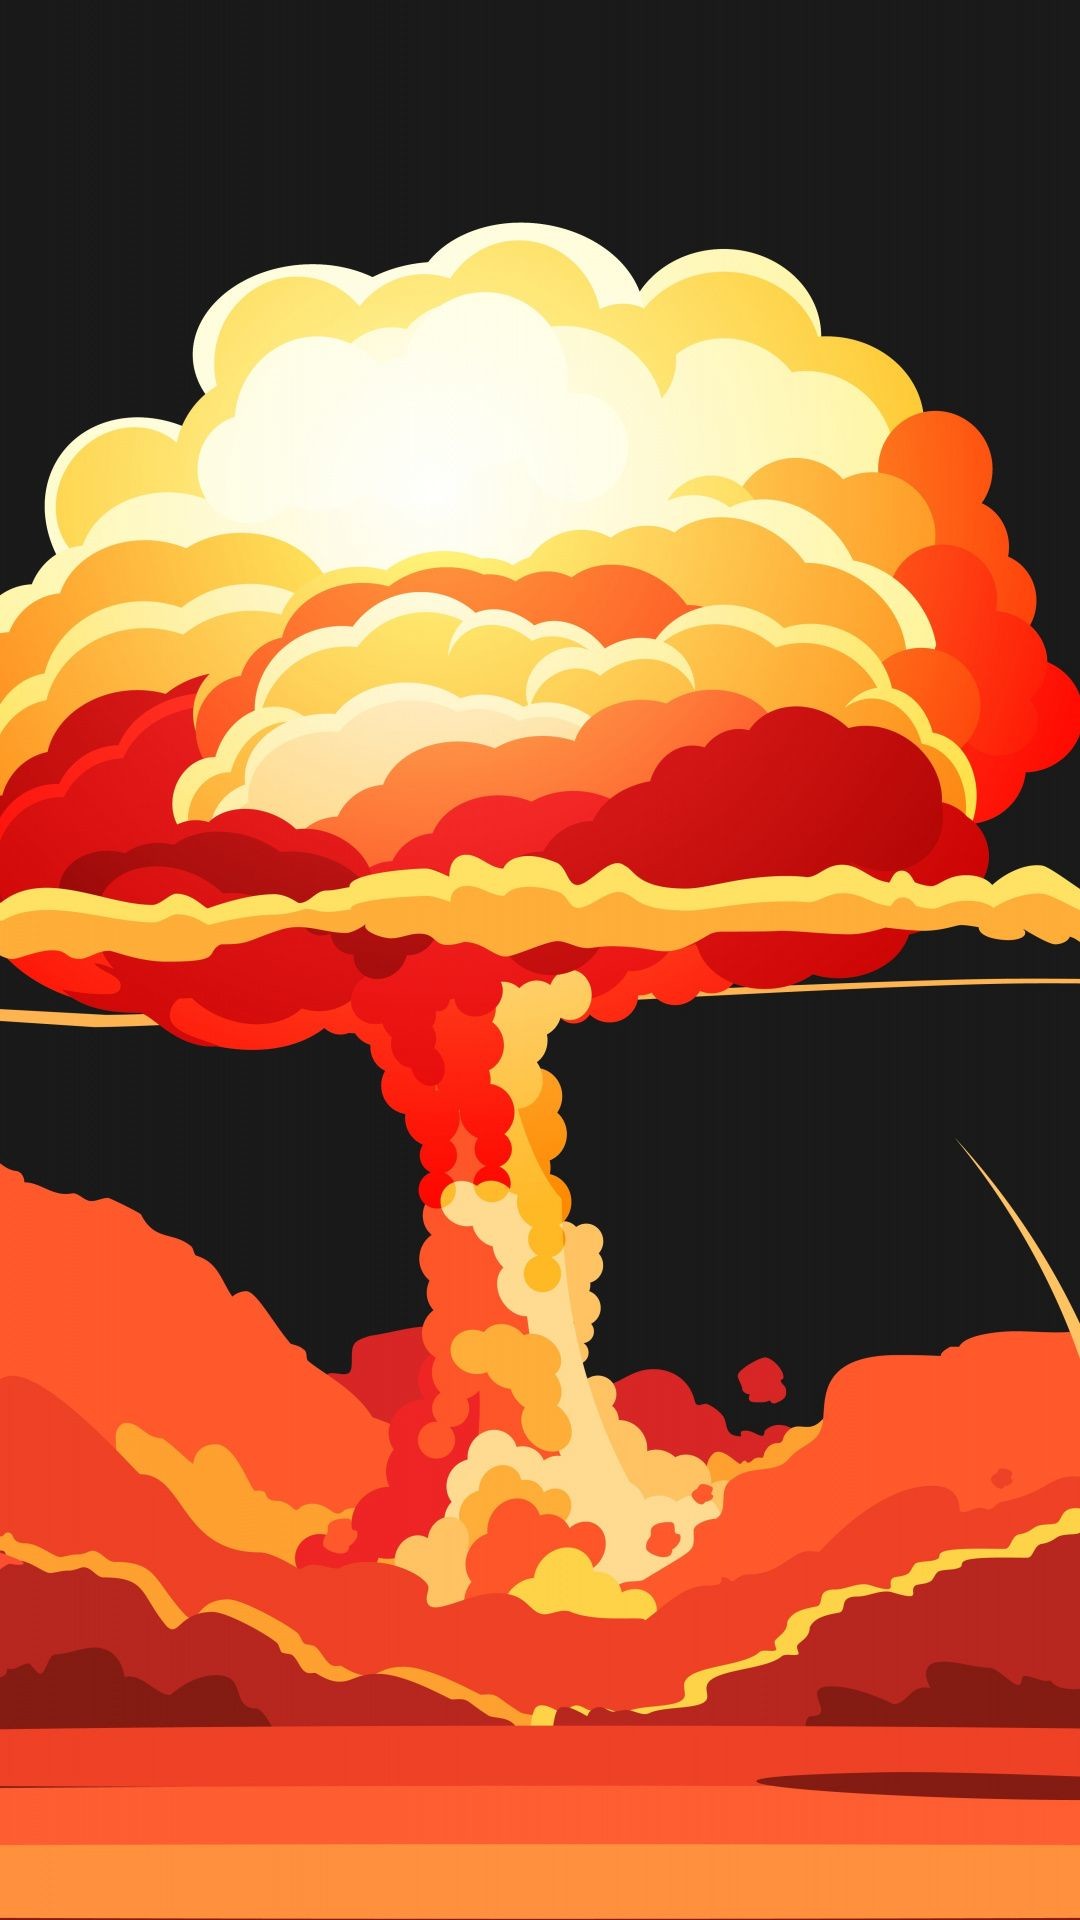 1080x1920 Atomic bomb, explosion, clouds, art,  wallpaper